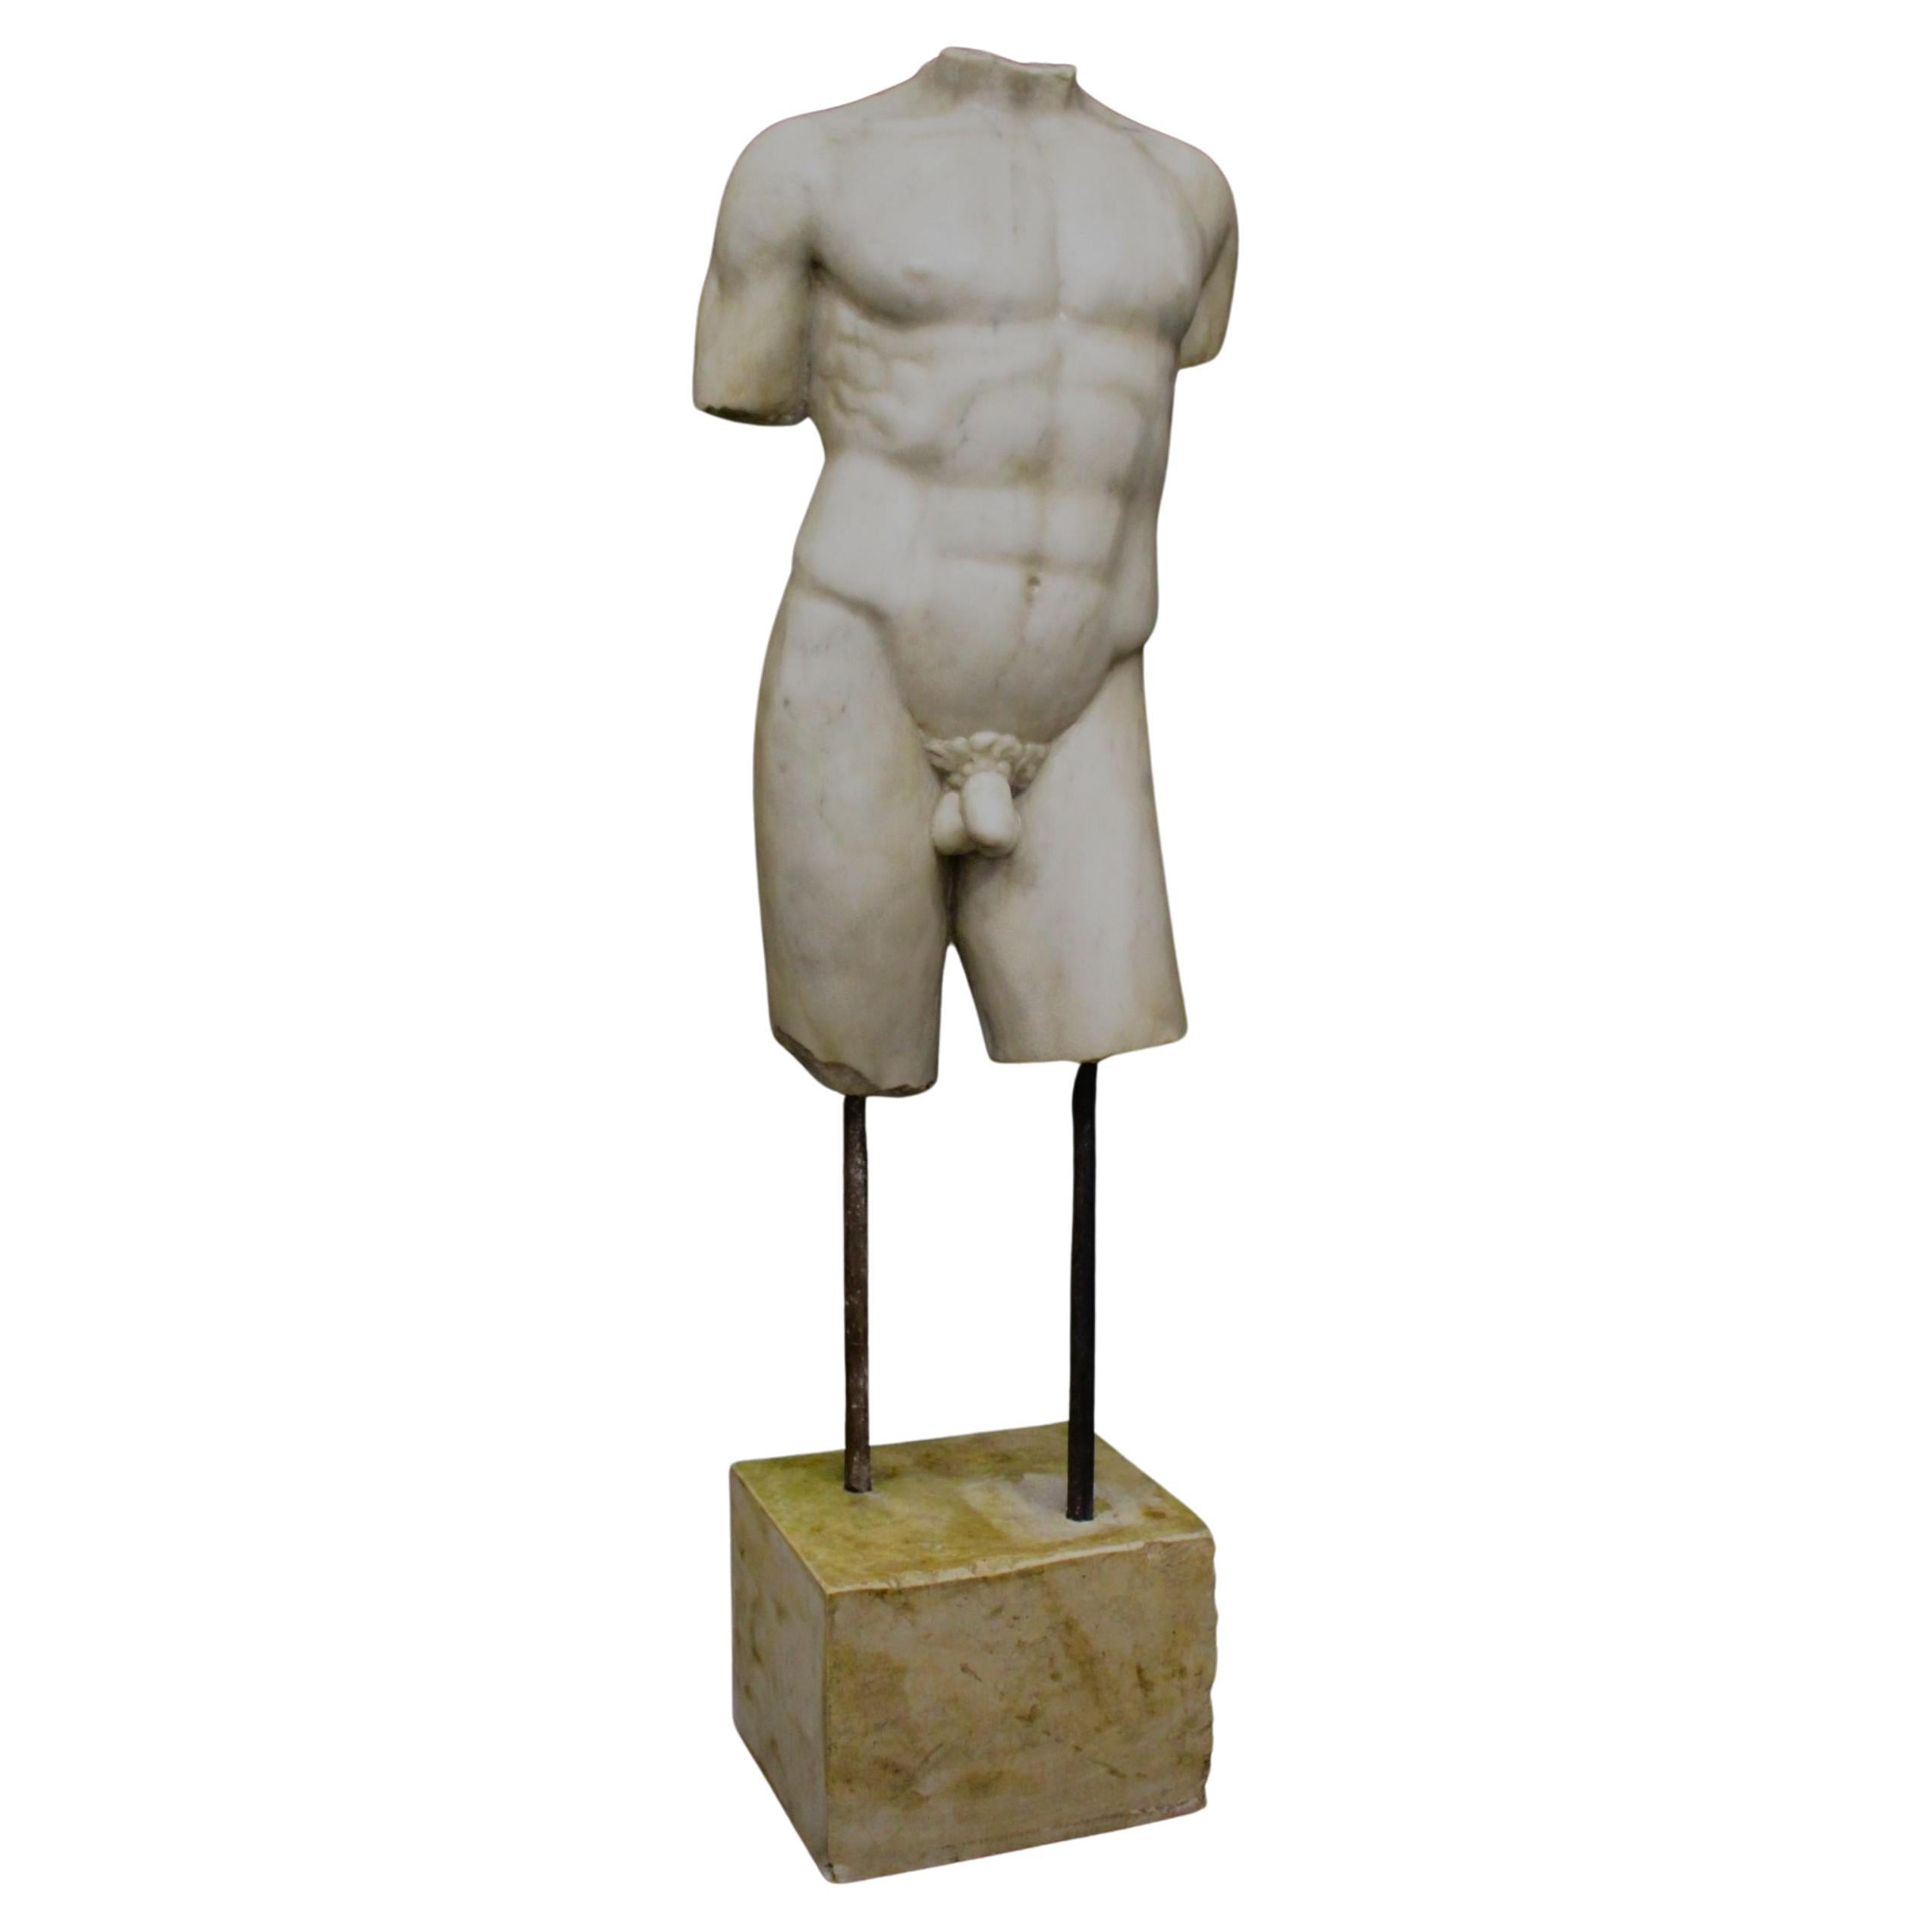 Torse en marbre, hauteur123 cm, buste en marbre de Carrare, sculpture en marbre en vente